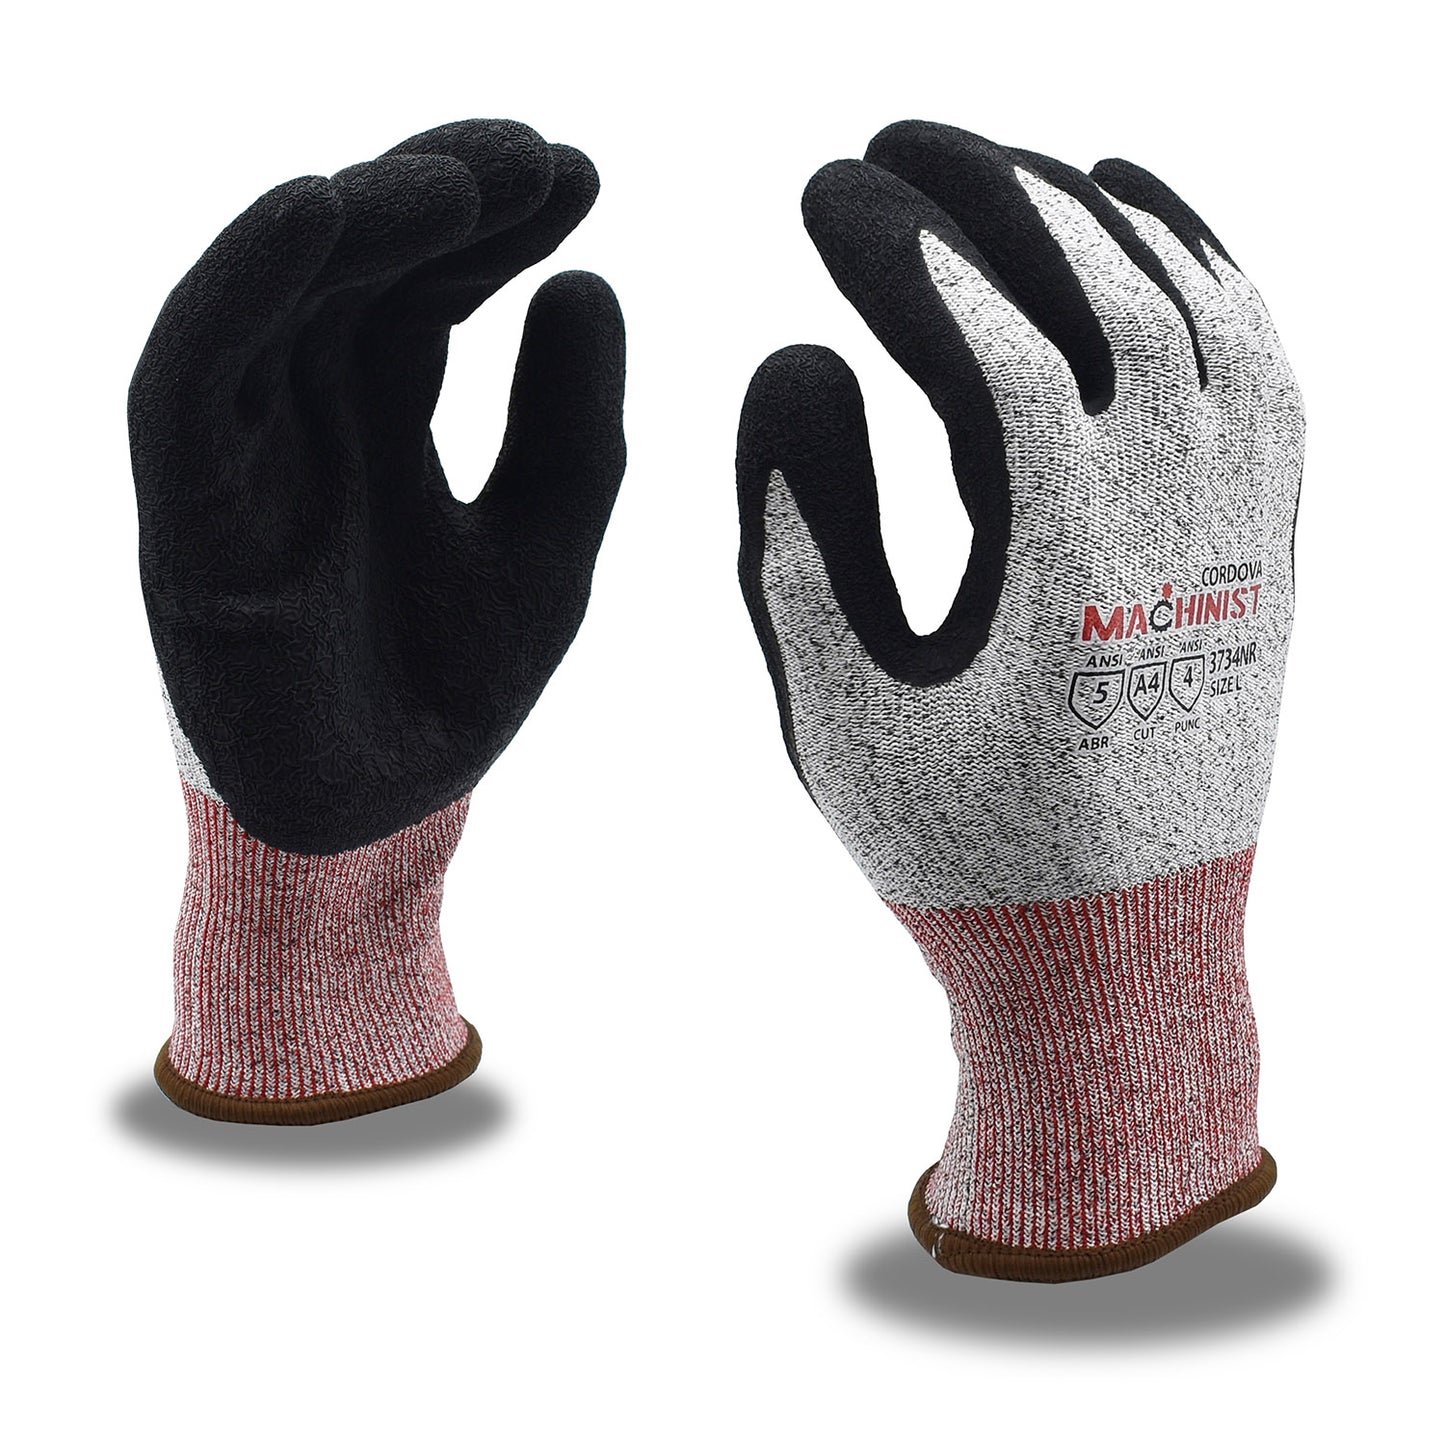 Cut-Resistant Gloves, ANSI Cut Level A4, Crinkle Latex Coat